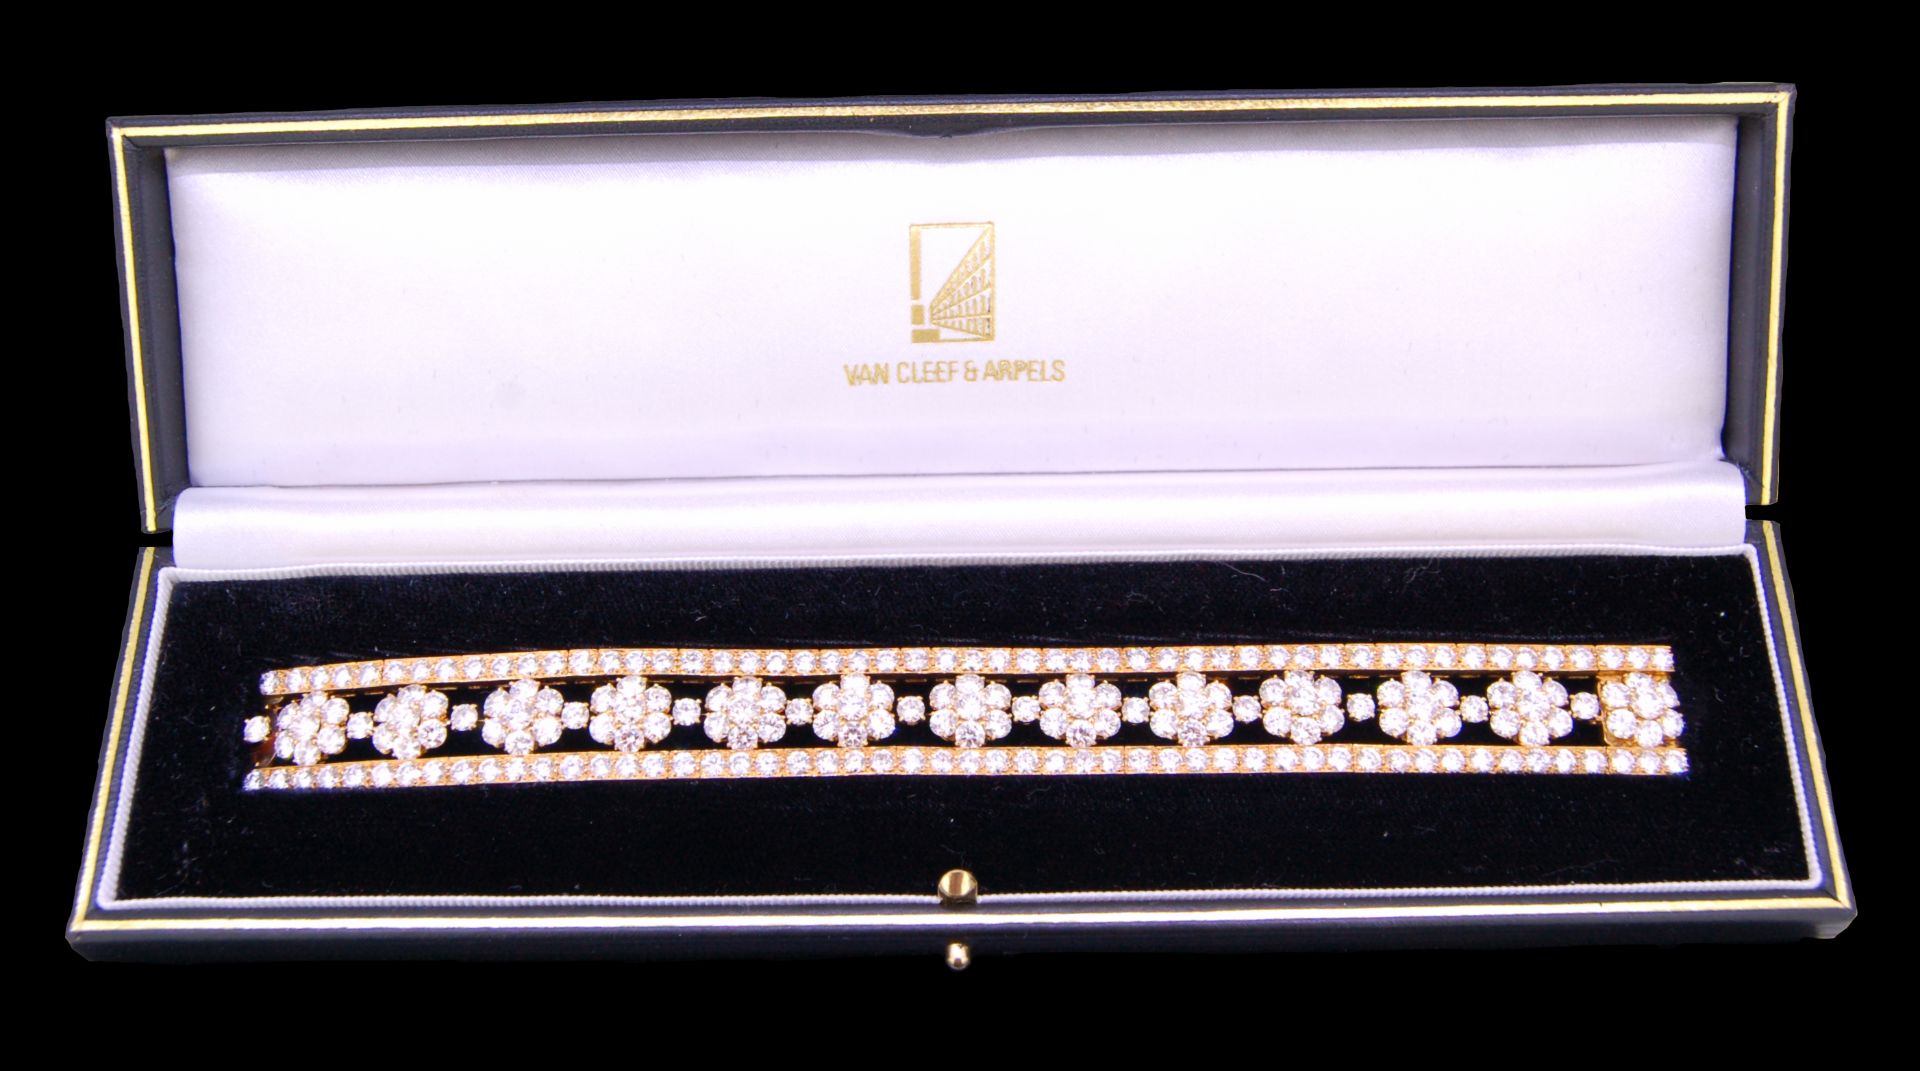 VAN CLEEF & ARPELS, AN IMPORTANT DIAMOND BRACELET - Image 6 of 6